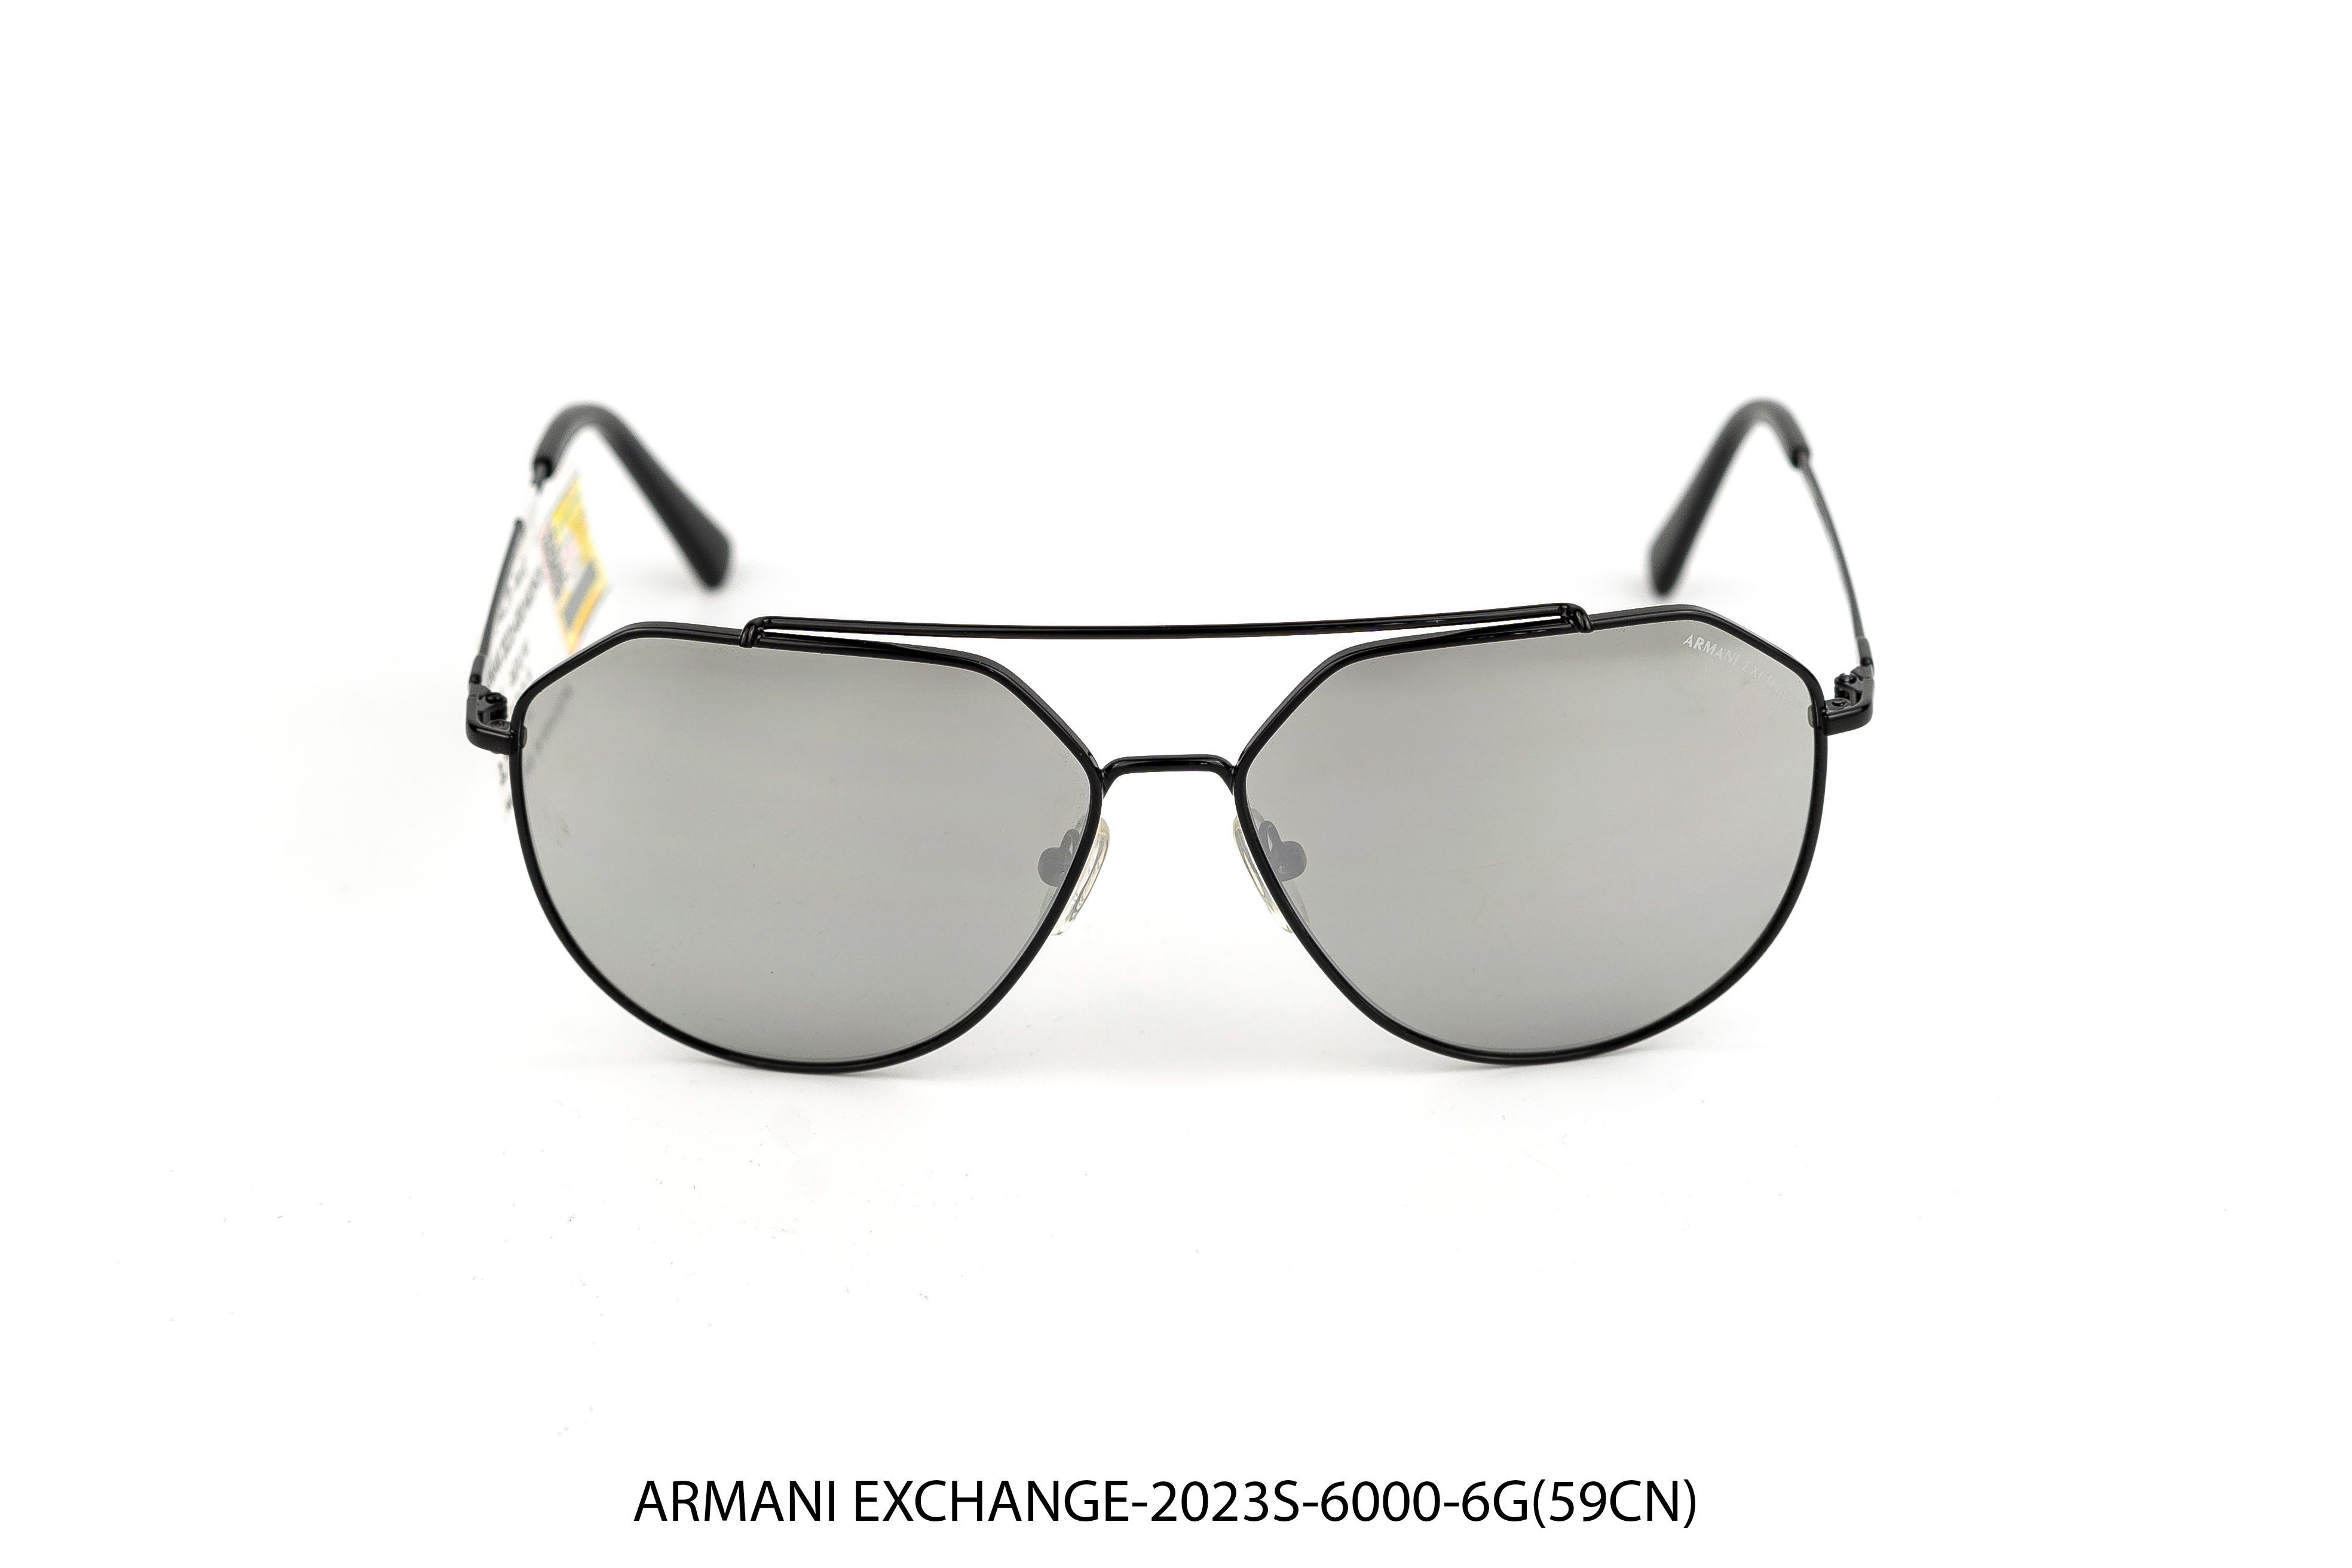 ARMANI EXCHANGE-2023S-6000-6G(59CN) - OURESS